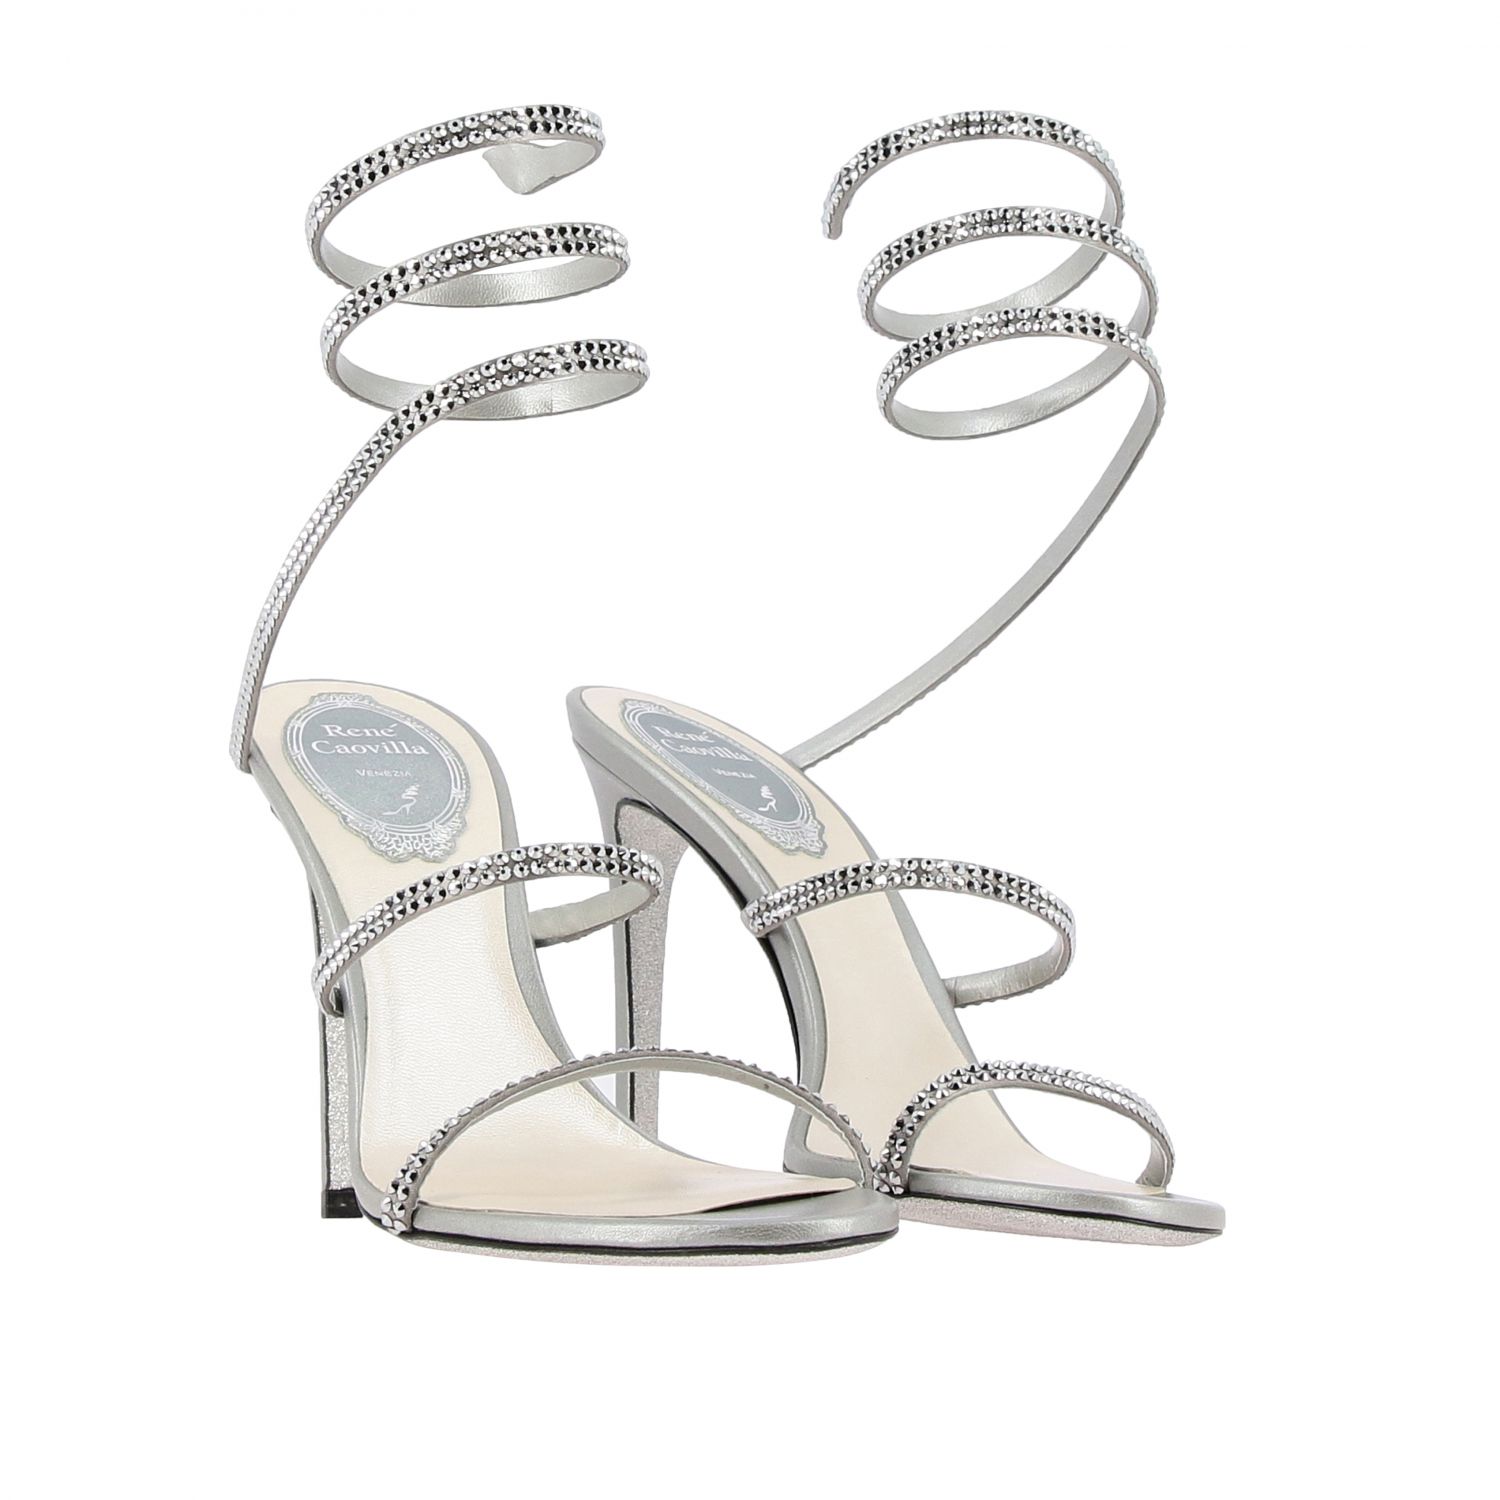 Rene Caovilla Outlet: heeled sandals for woman - Silver | Rene Caovilla ...